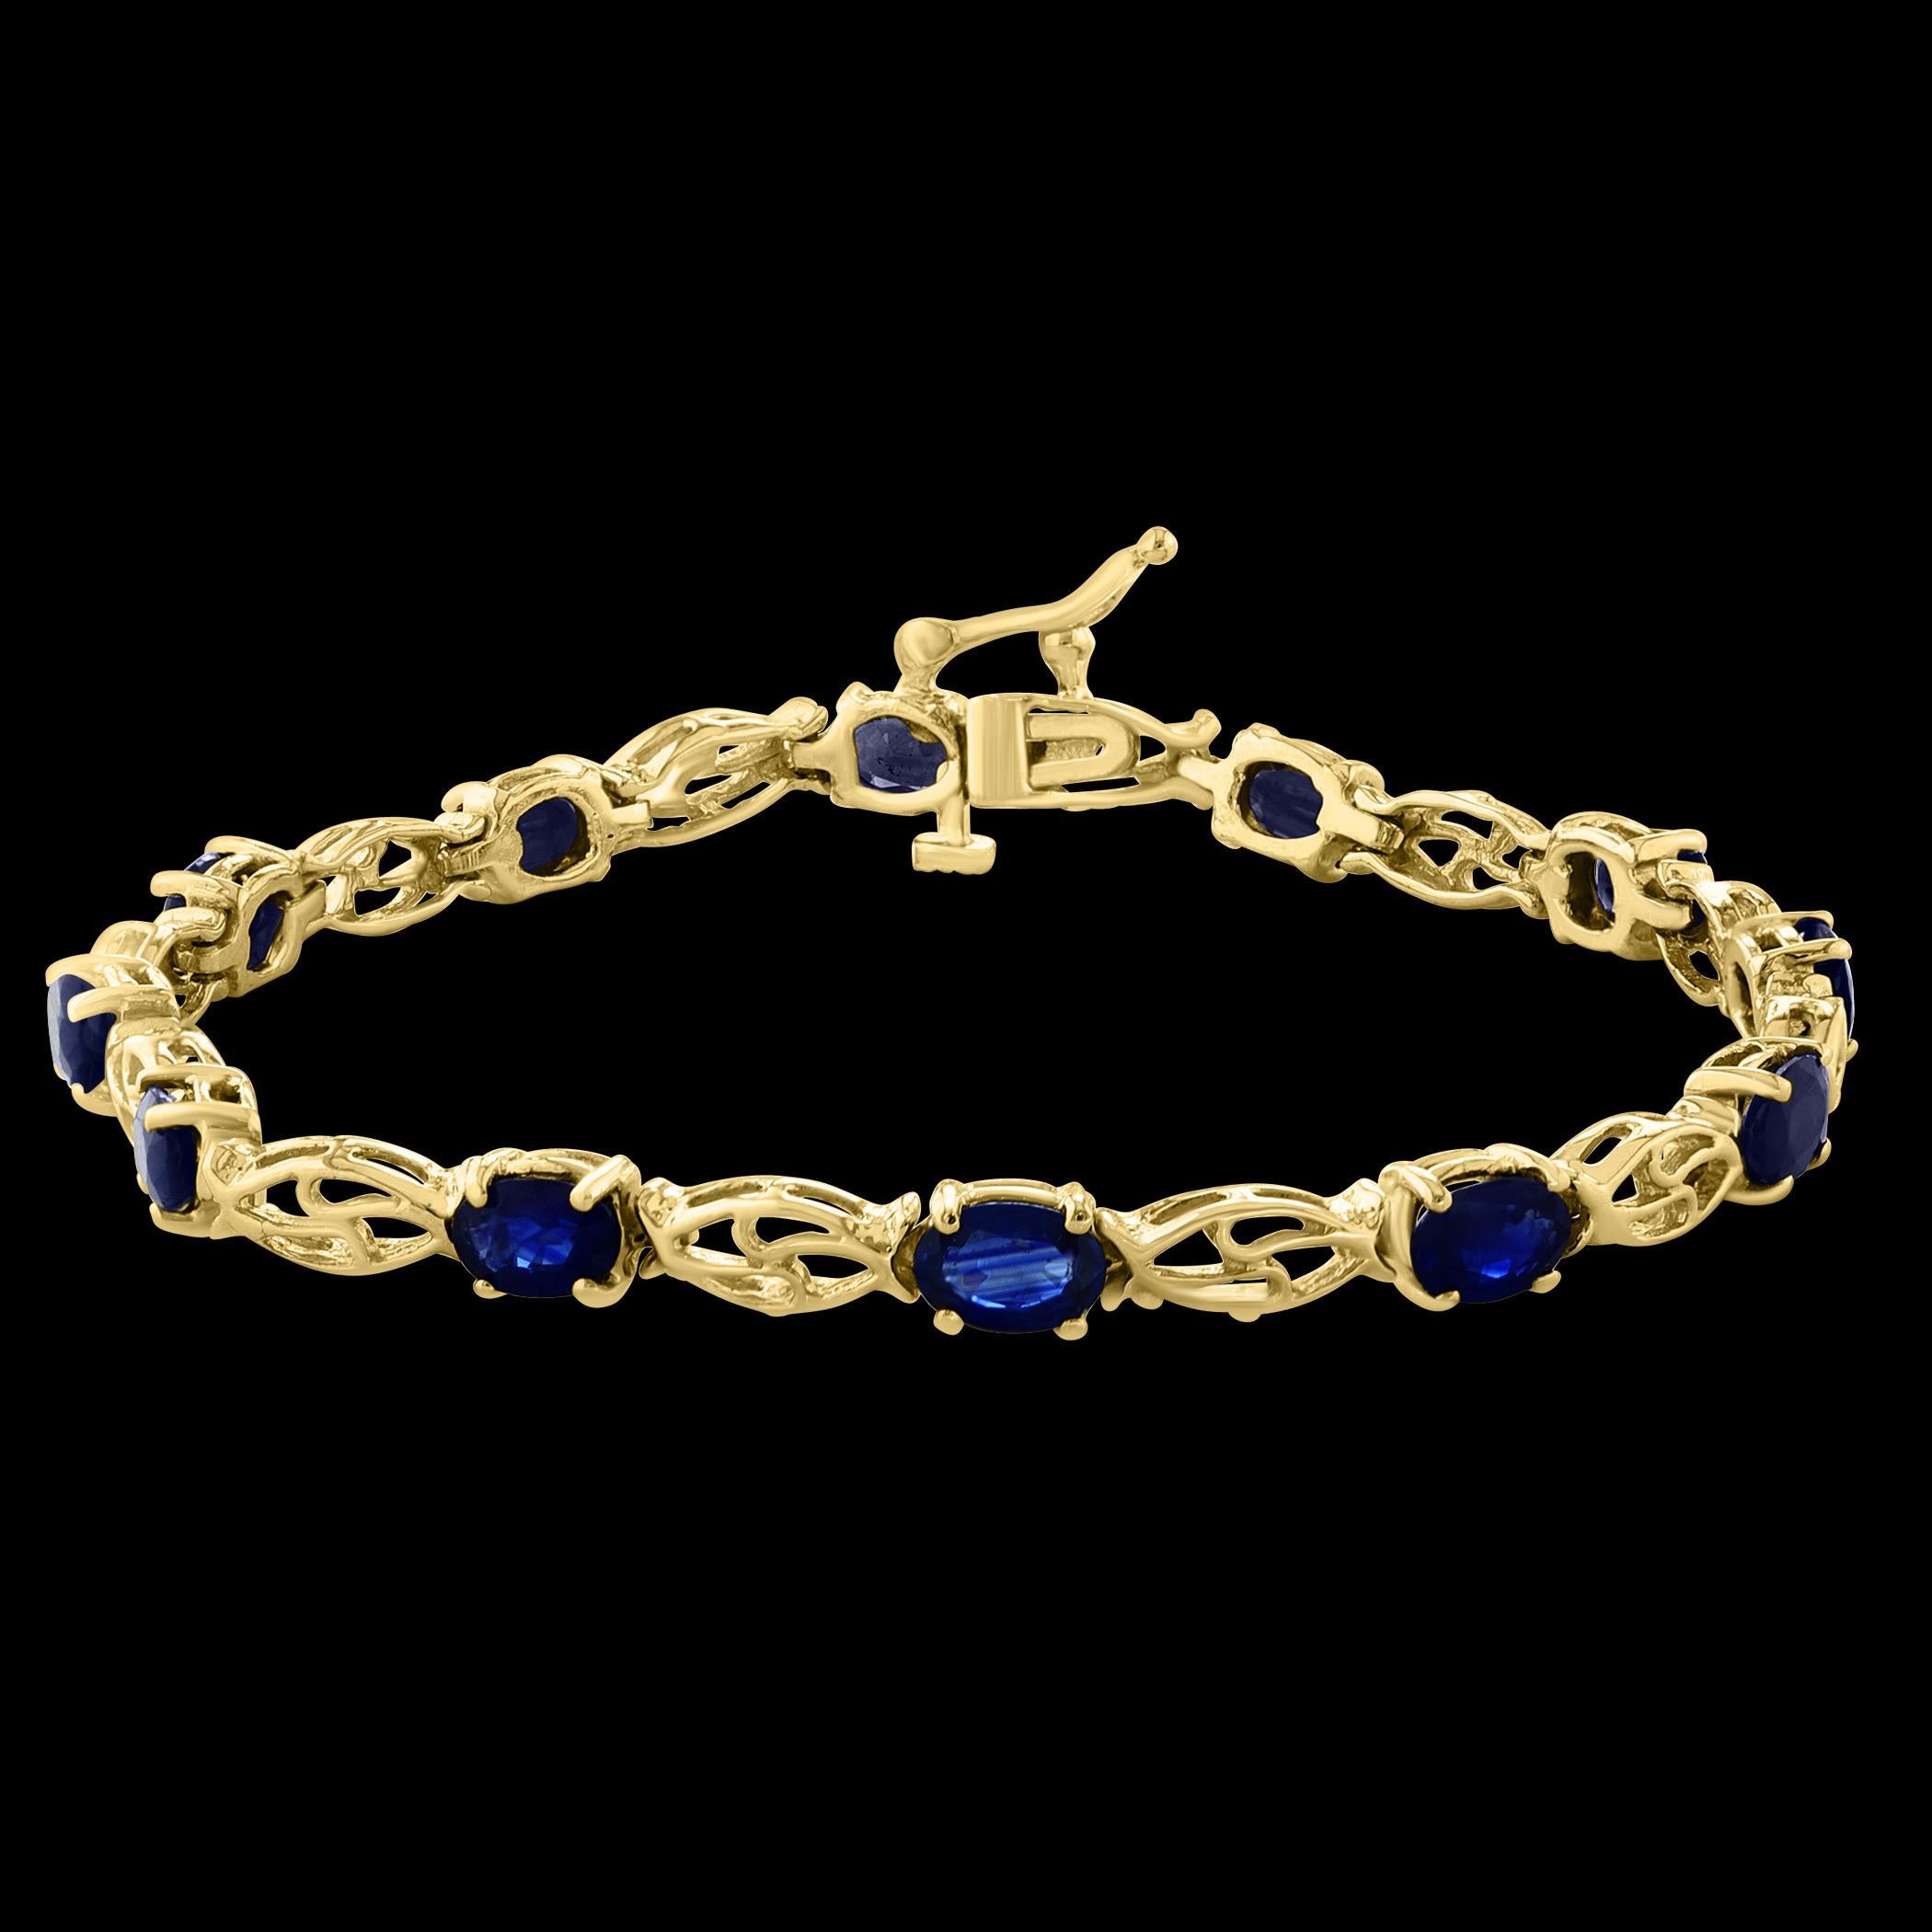 8Ct Natural Oval Blue Sapphire Tennis Bracelet 14 Karat Yellow Gold, 7 Inch Long For Sale 4